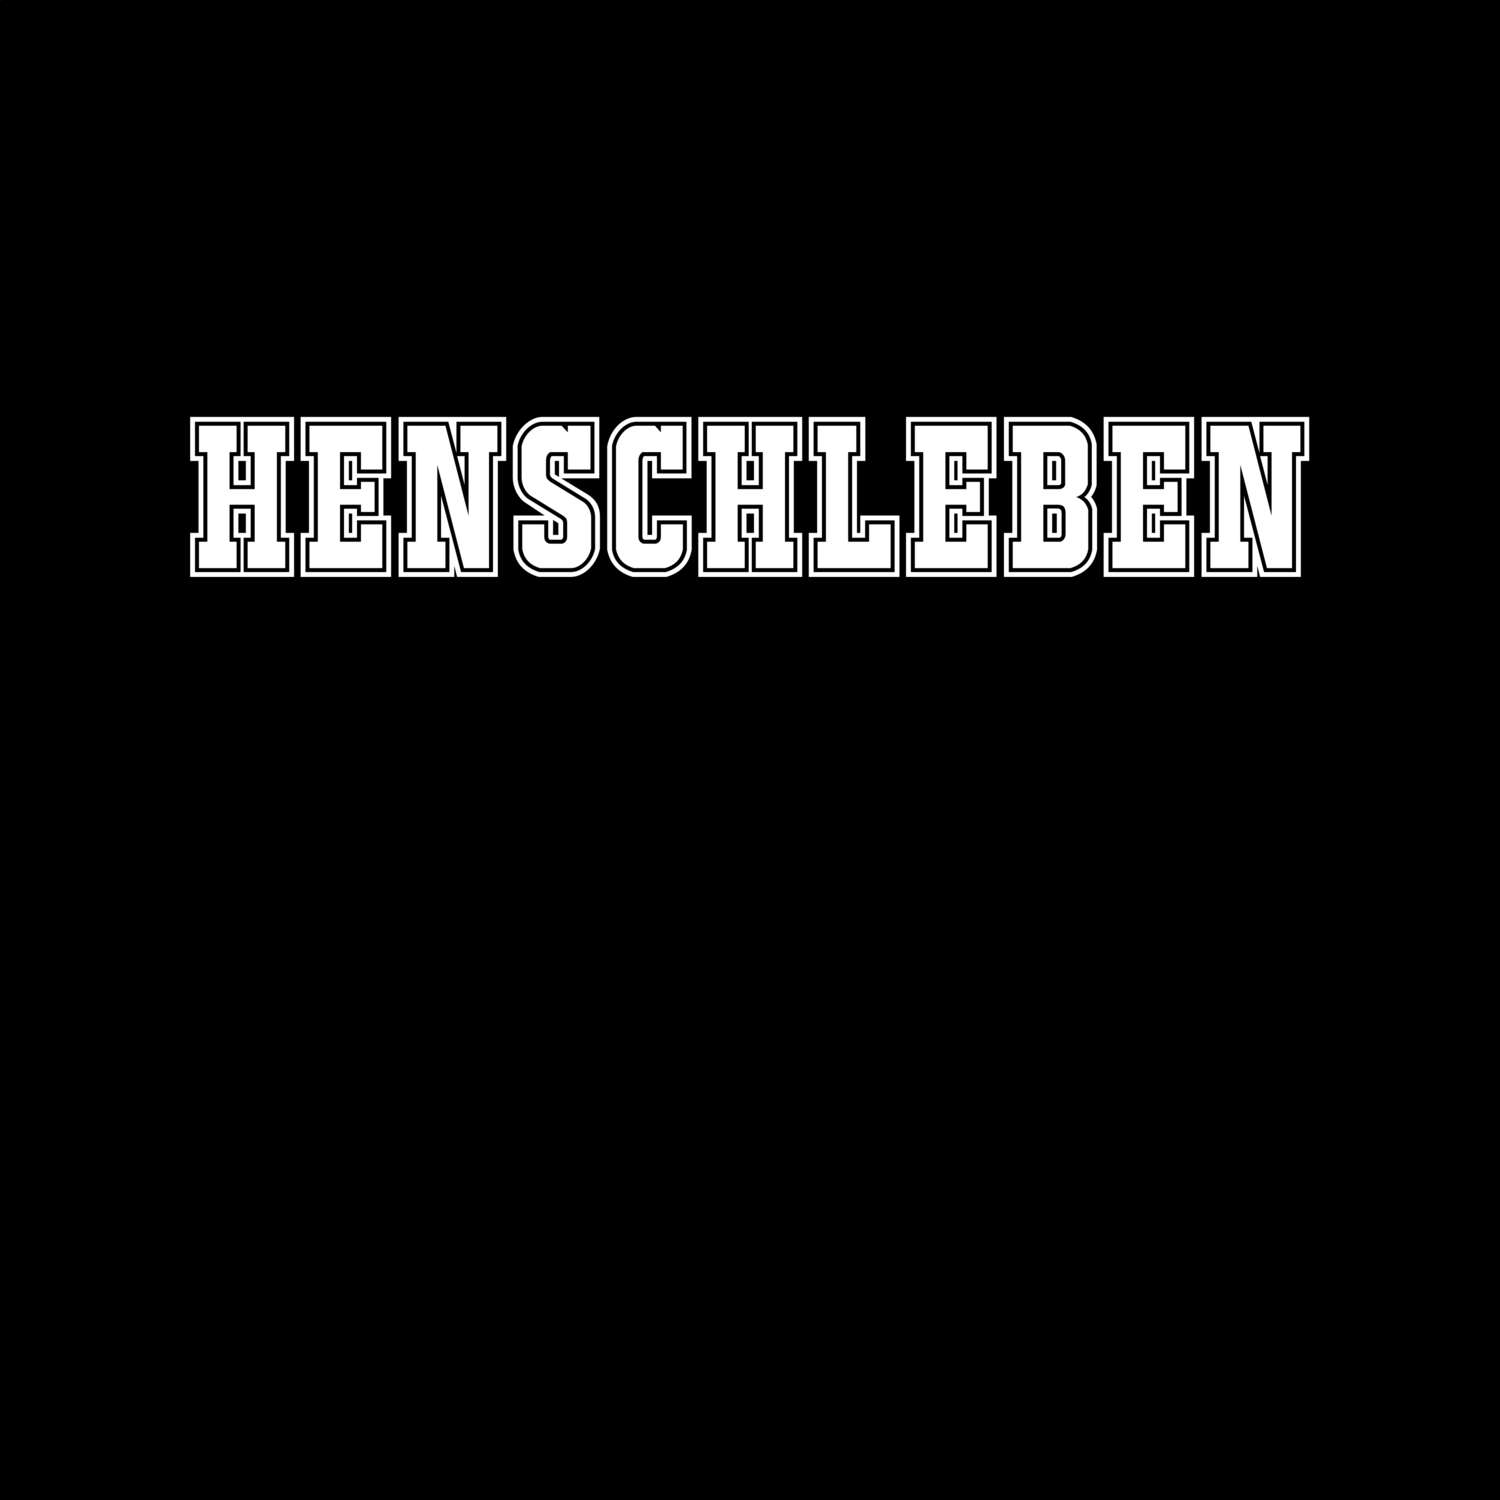 Henschleben T-Shirt »Classic«